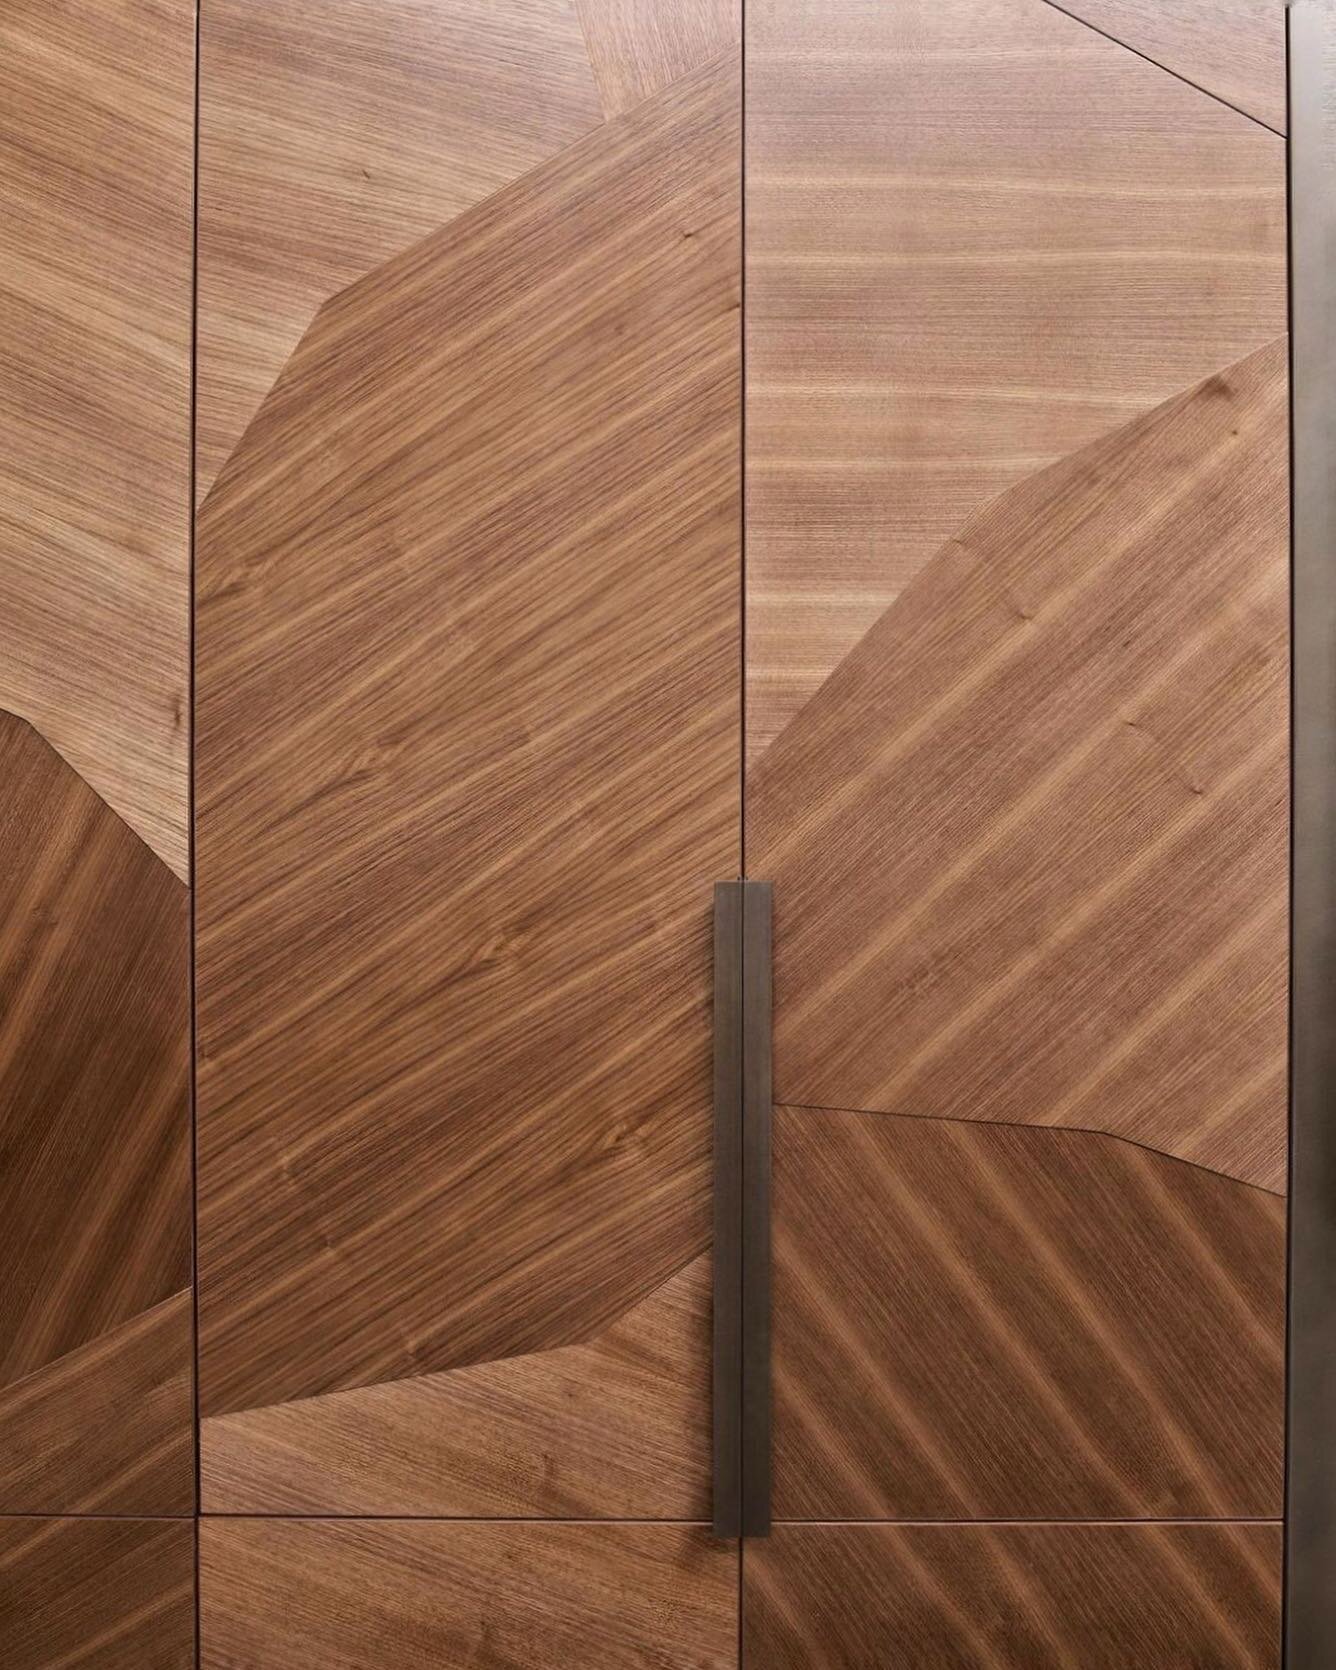 Swaths of walnut in pattern play. #interiors #design @flackstudio_